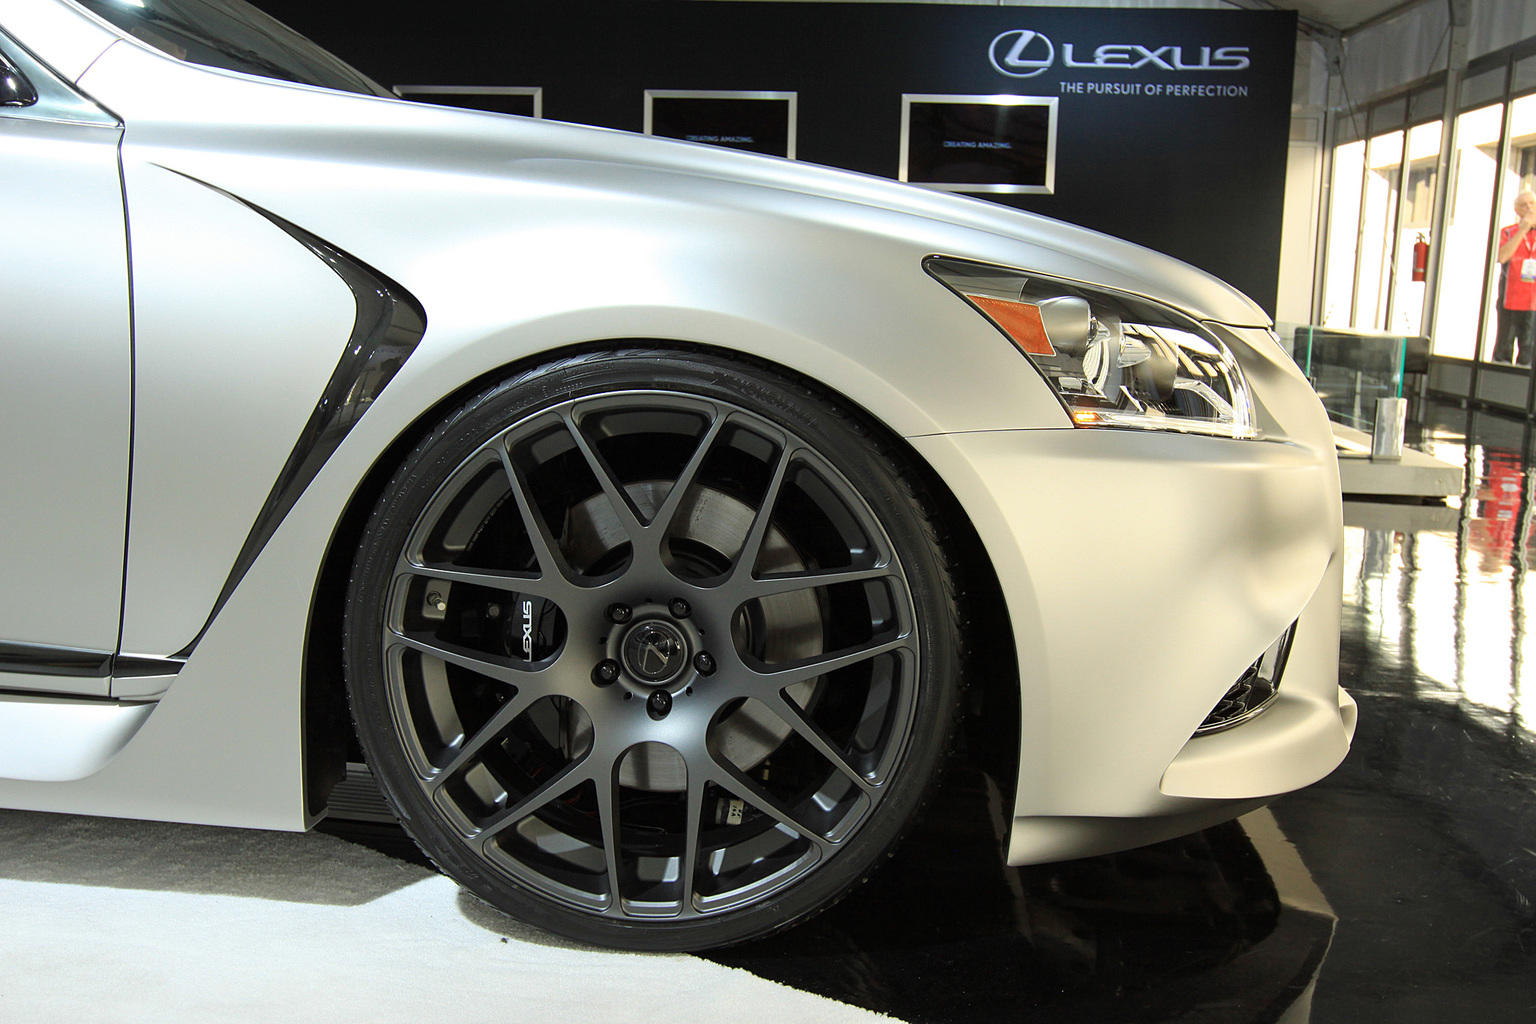 2012 Lexus LS F Sport by Five Axis Gallery